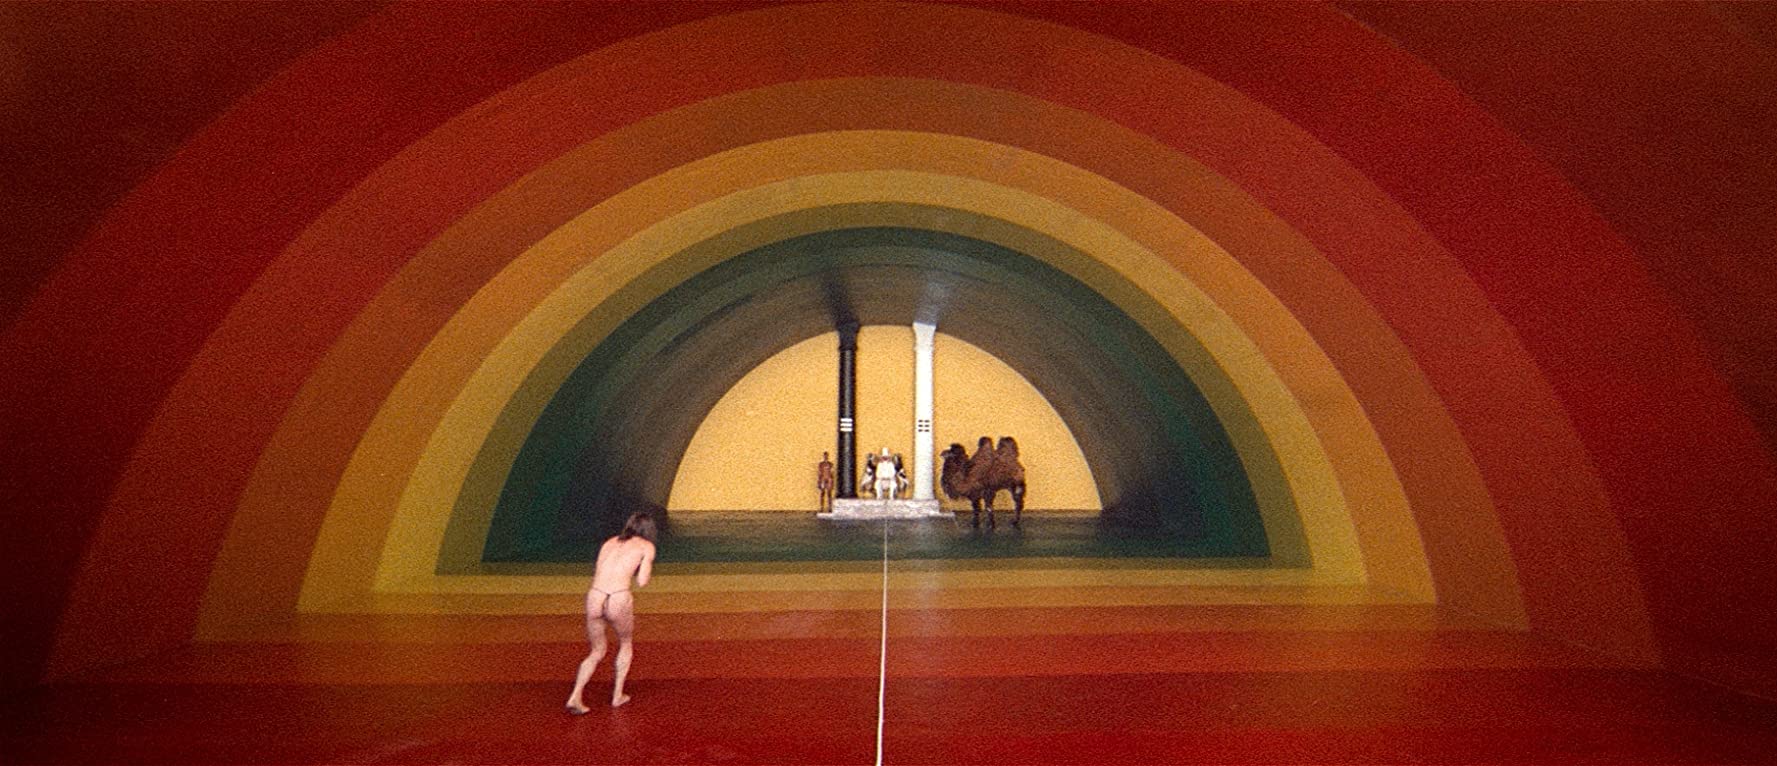 The Alchemist's inner sanctum in The Holy Mountain (1973)